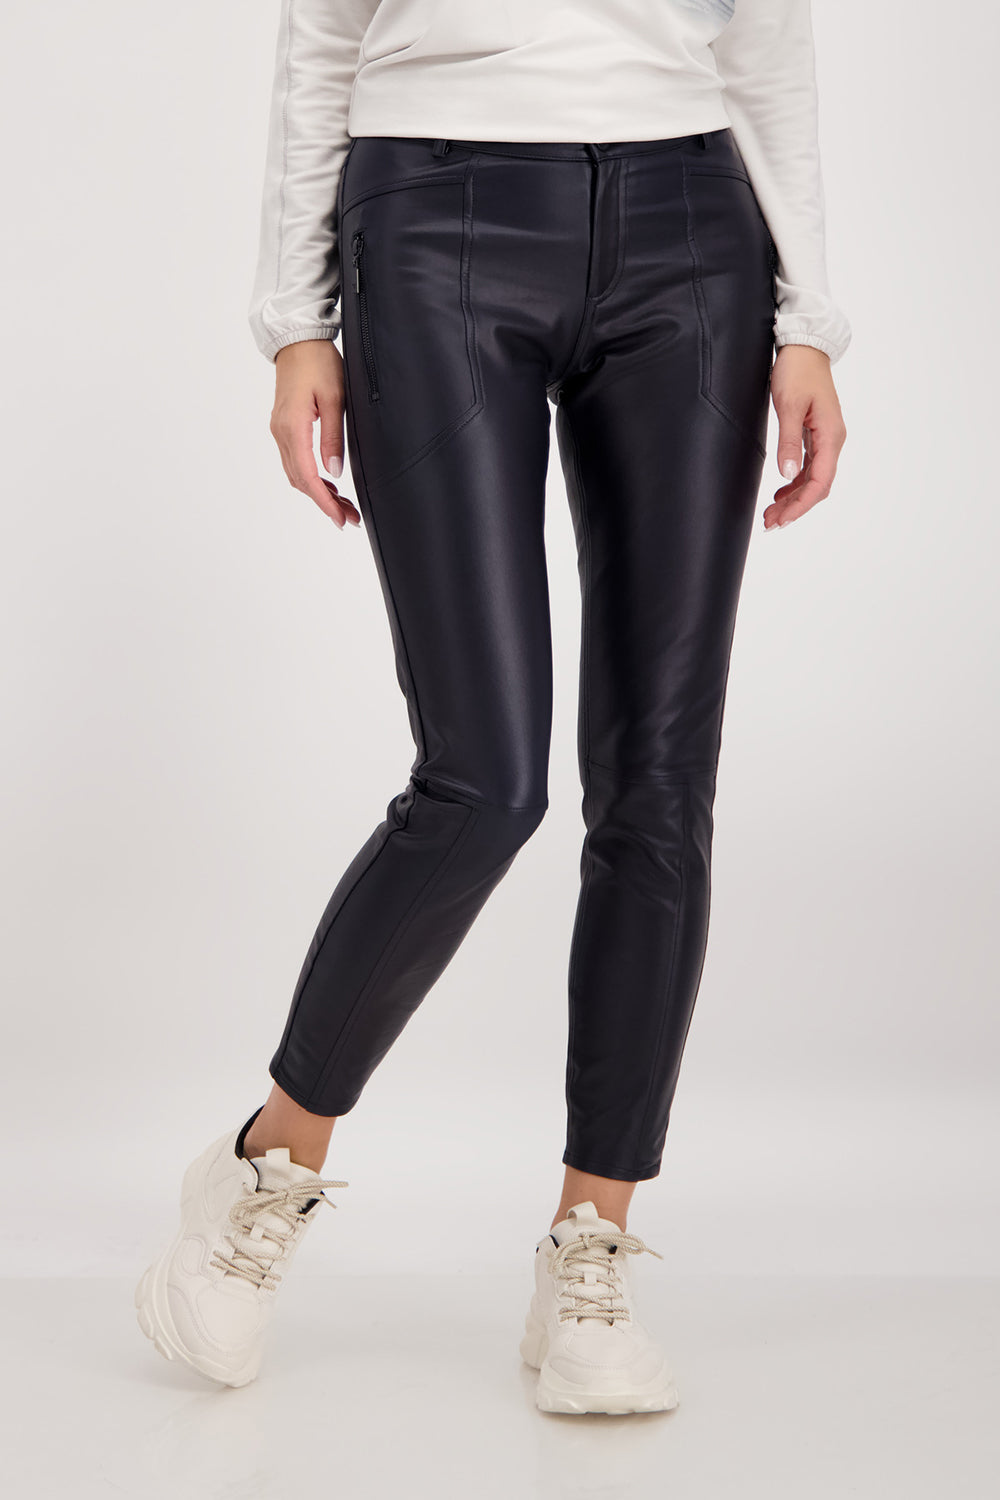 LIU JO crystal-embellished Skinny Trousers - Farfetch